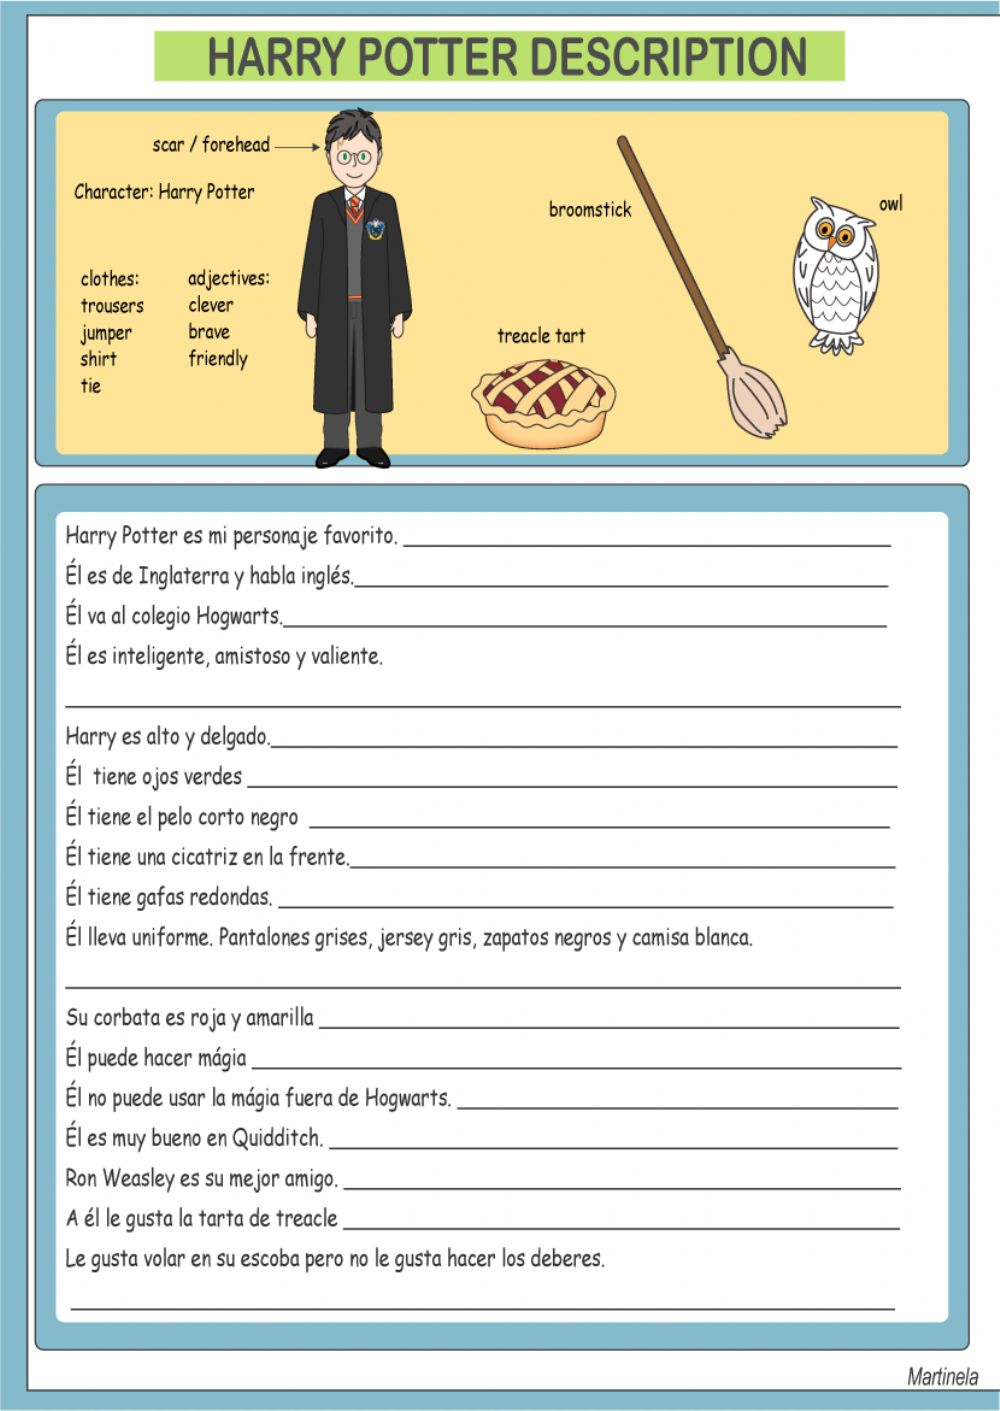 Harry Potter Present Simple Worksheet